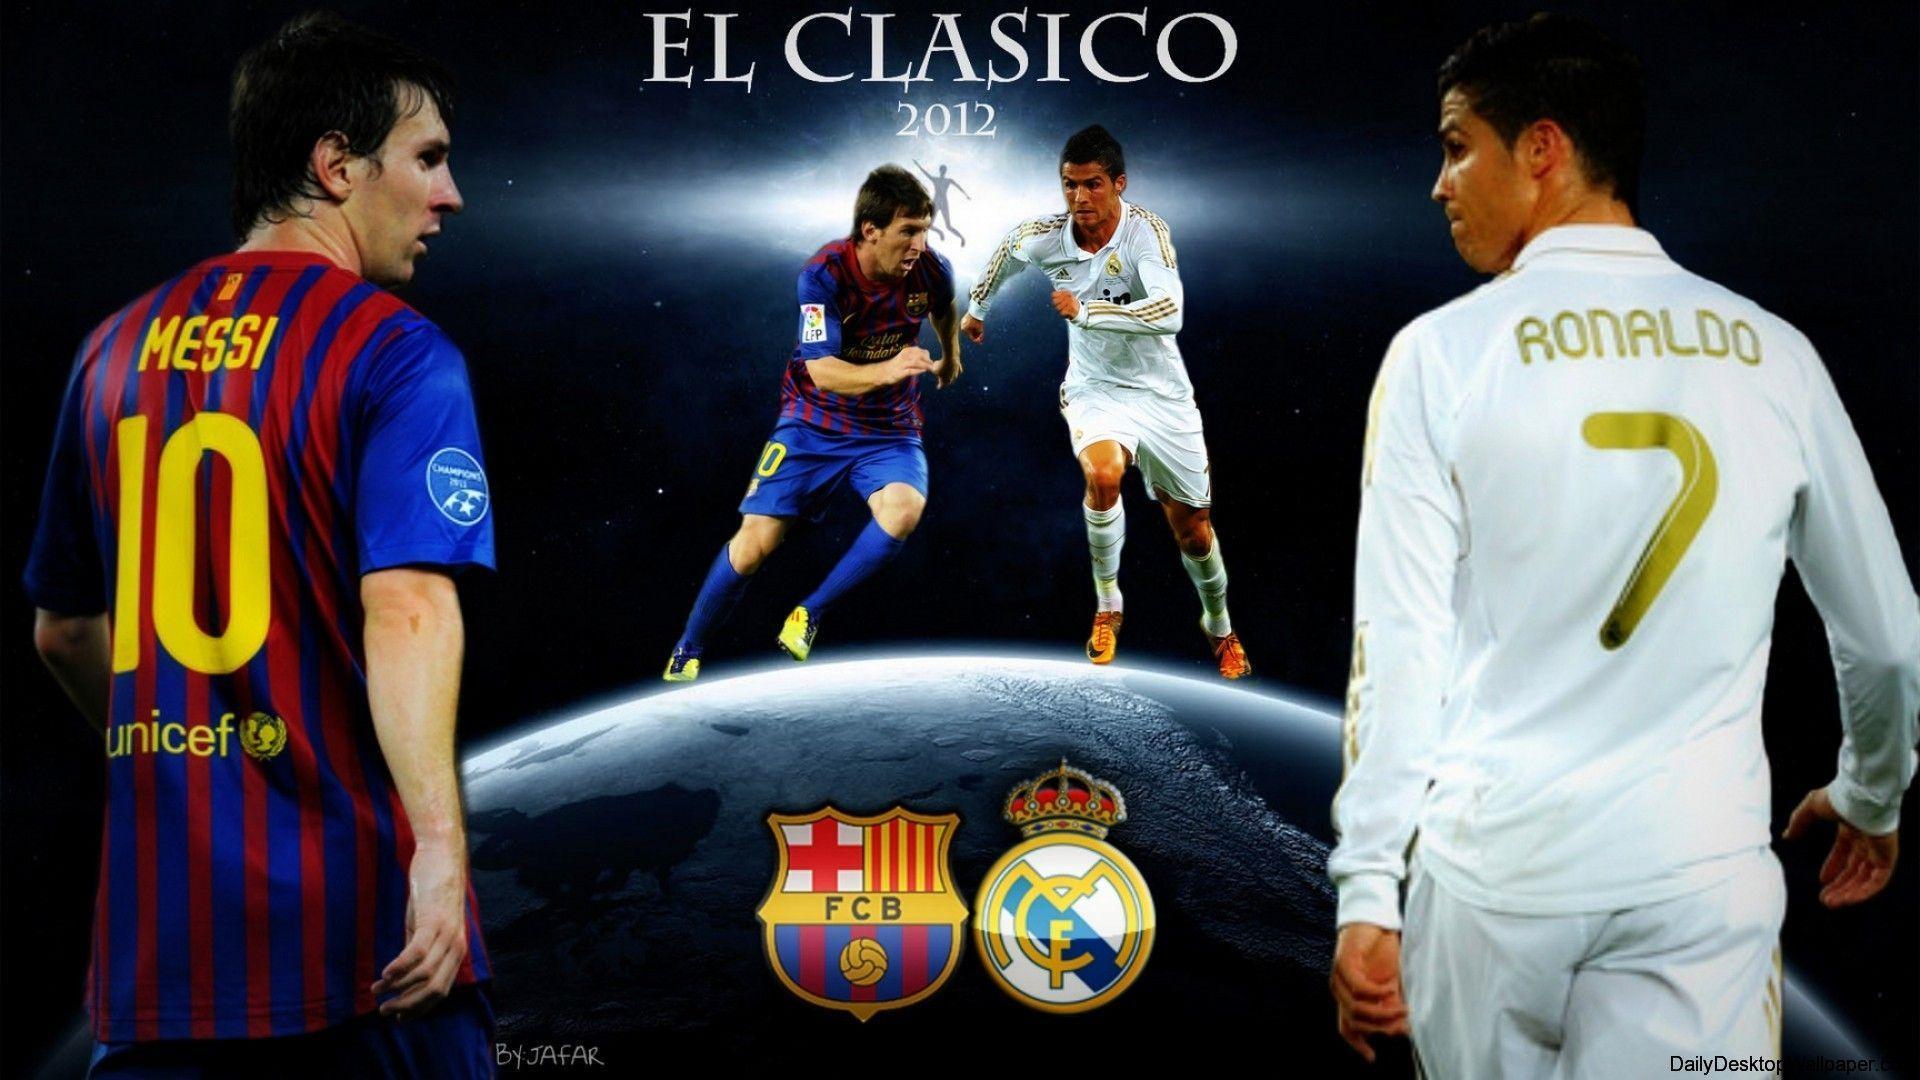 Messi And Ronaldo Wallpaper: Players, Teams, Leagues Wallpaper